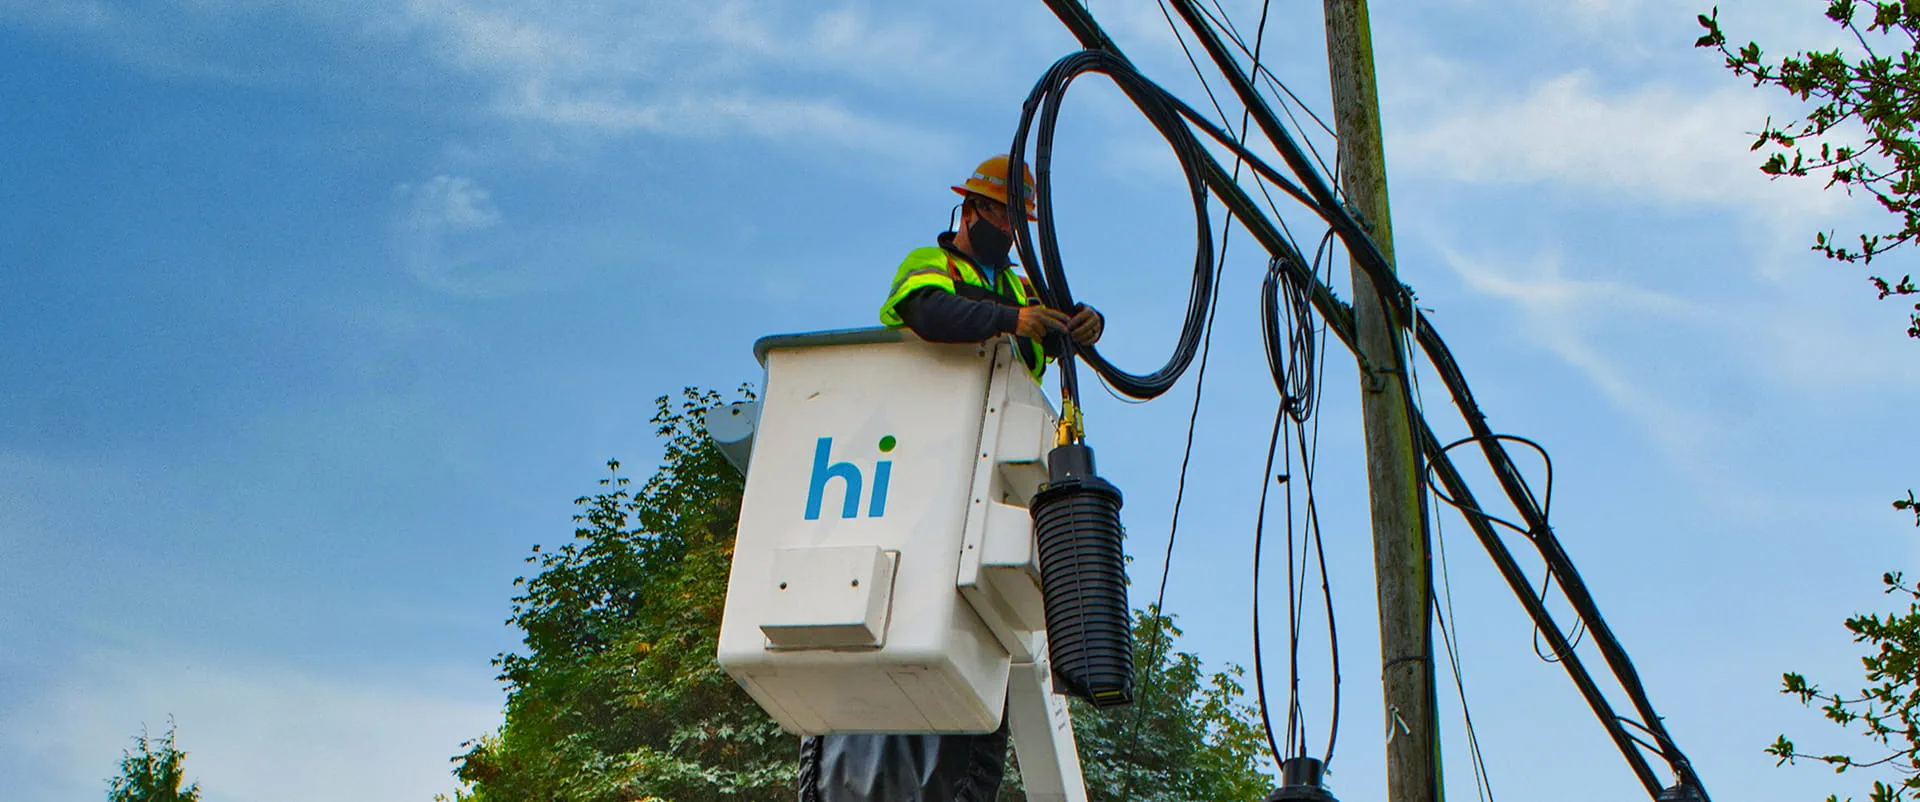 Ziply Fiber worker wearing a hardhat in the raised bucket of a construction crane 